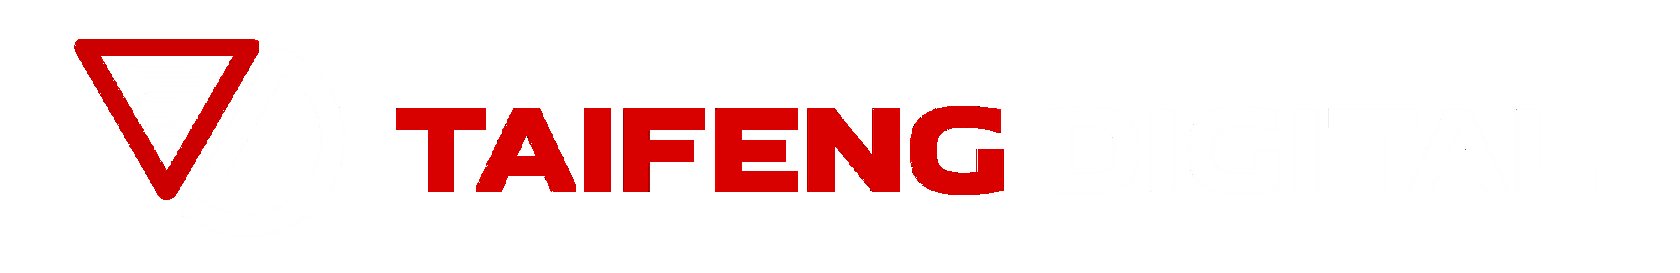 Taifeng Digital logo